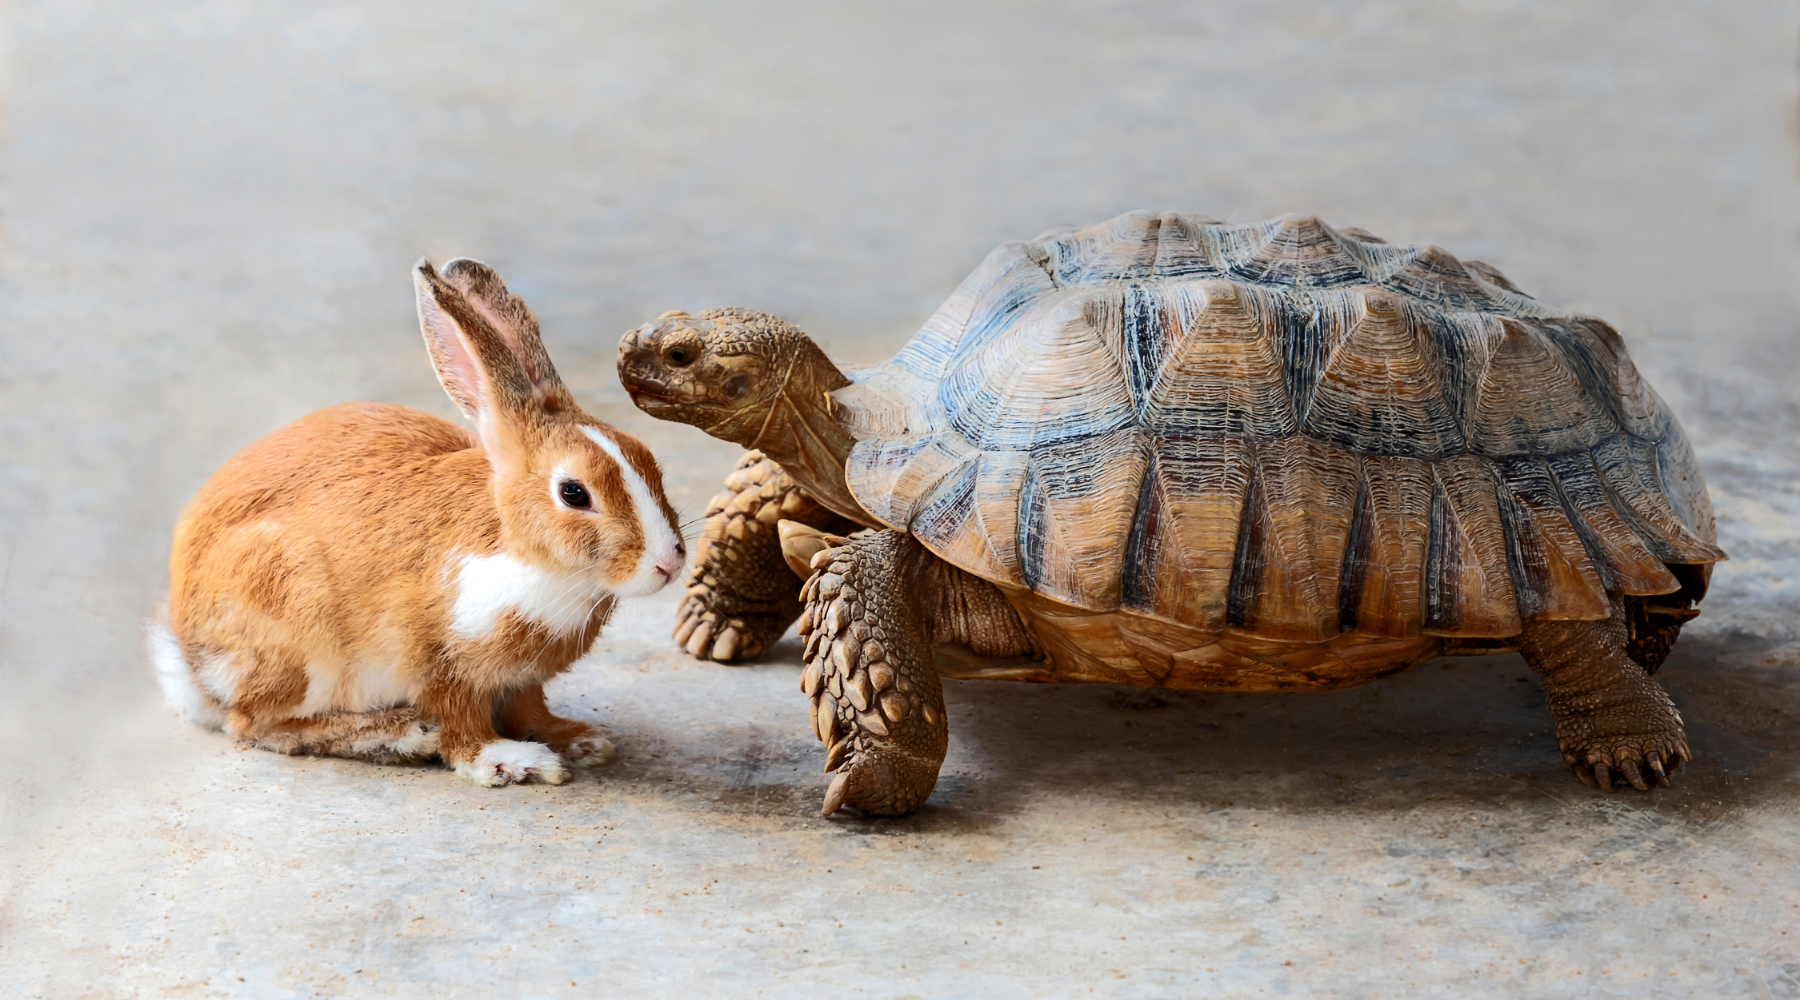 Bunny and tortoise